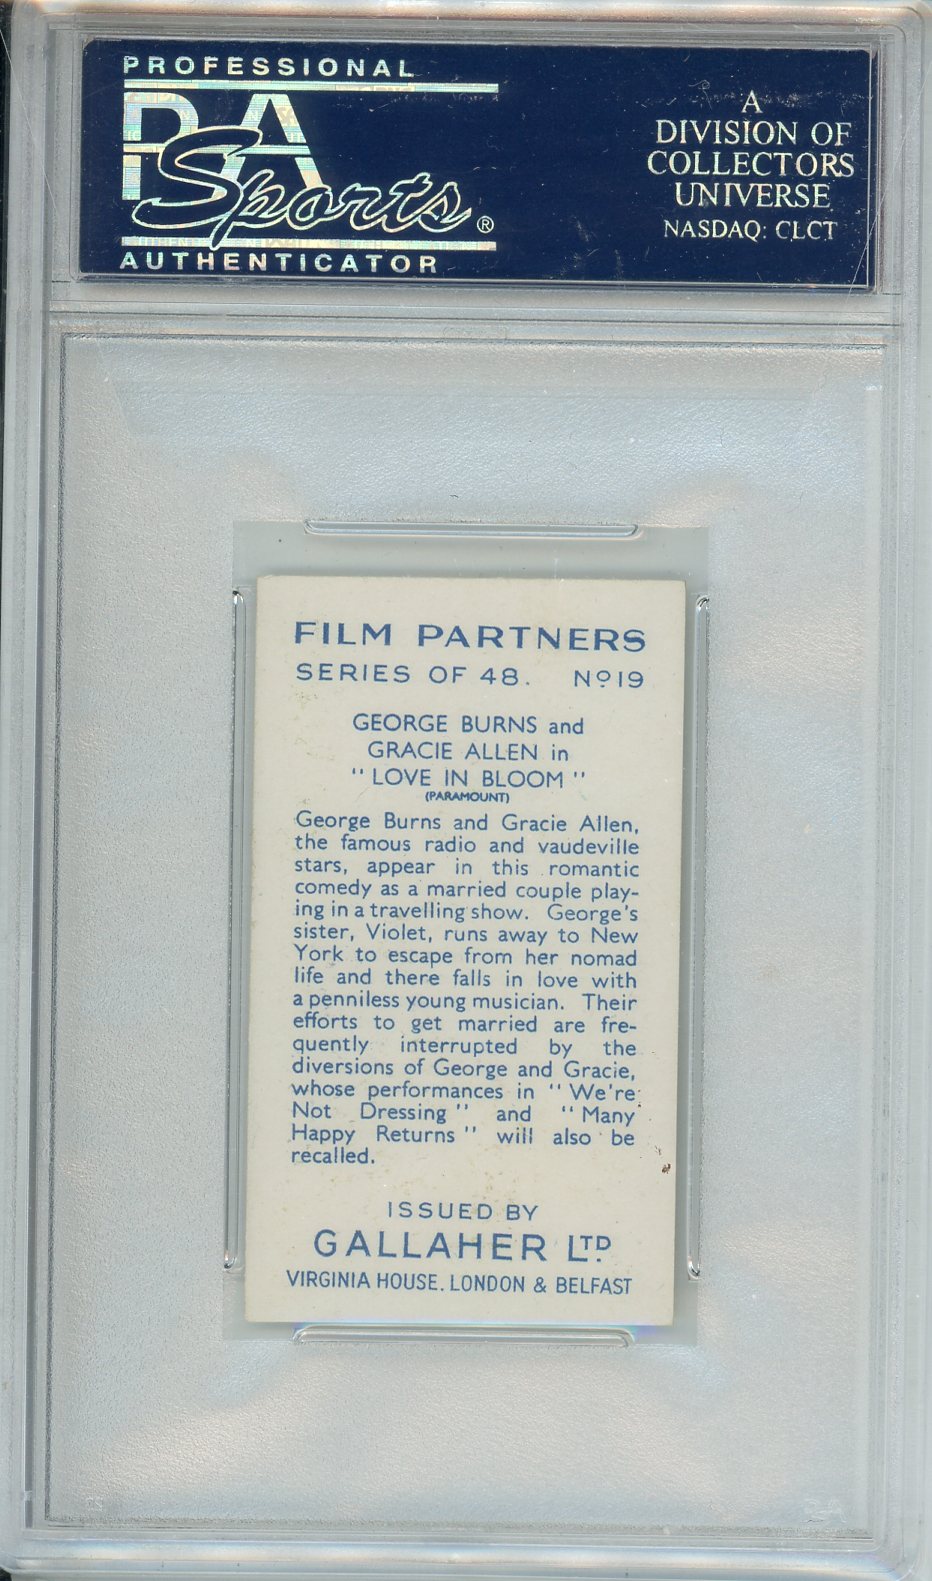 1935 Gallaher Ltd. George Burns/Gracie Allen Film Partners Graded Movie Card PSA 9